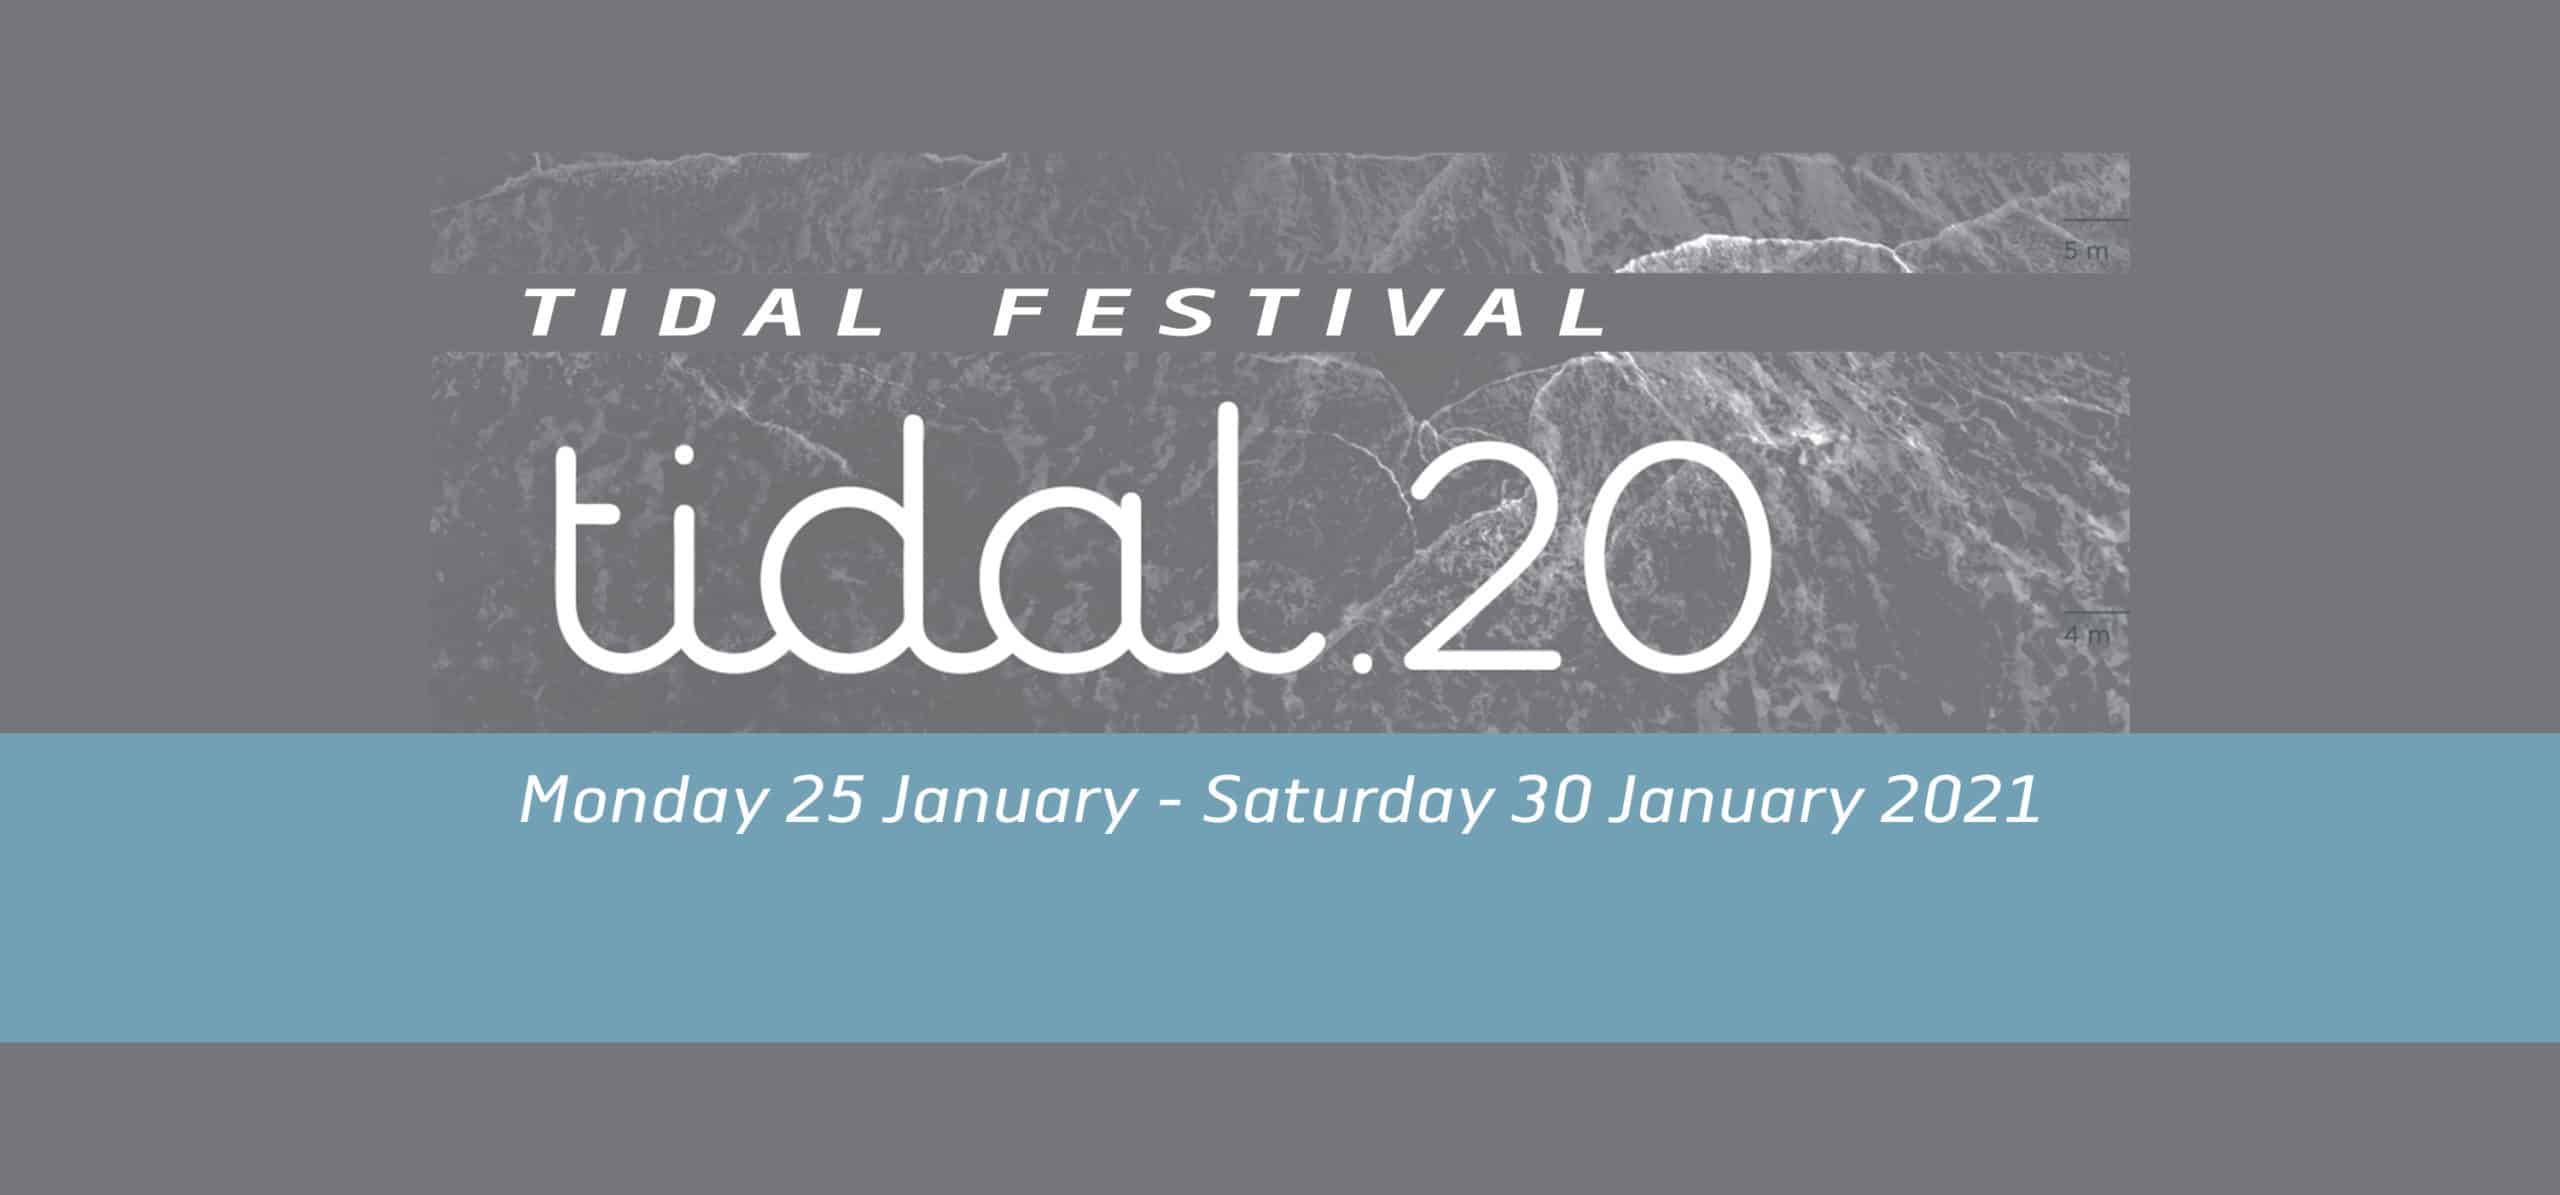 tidal blades banner festival